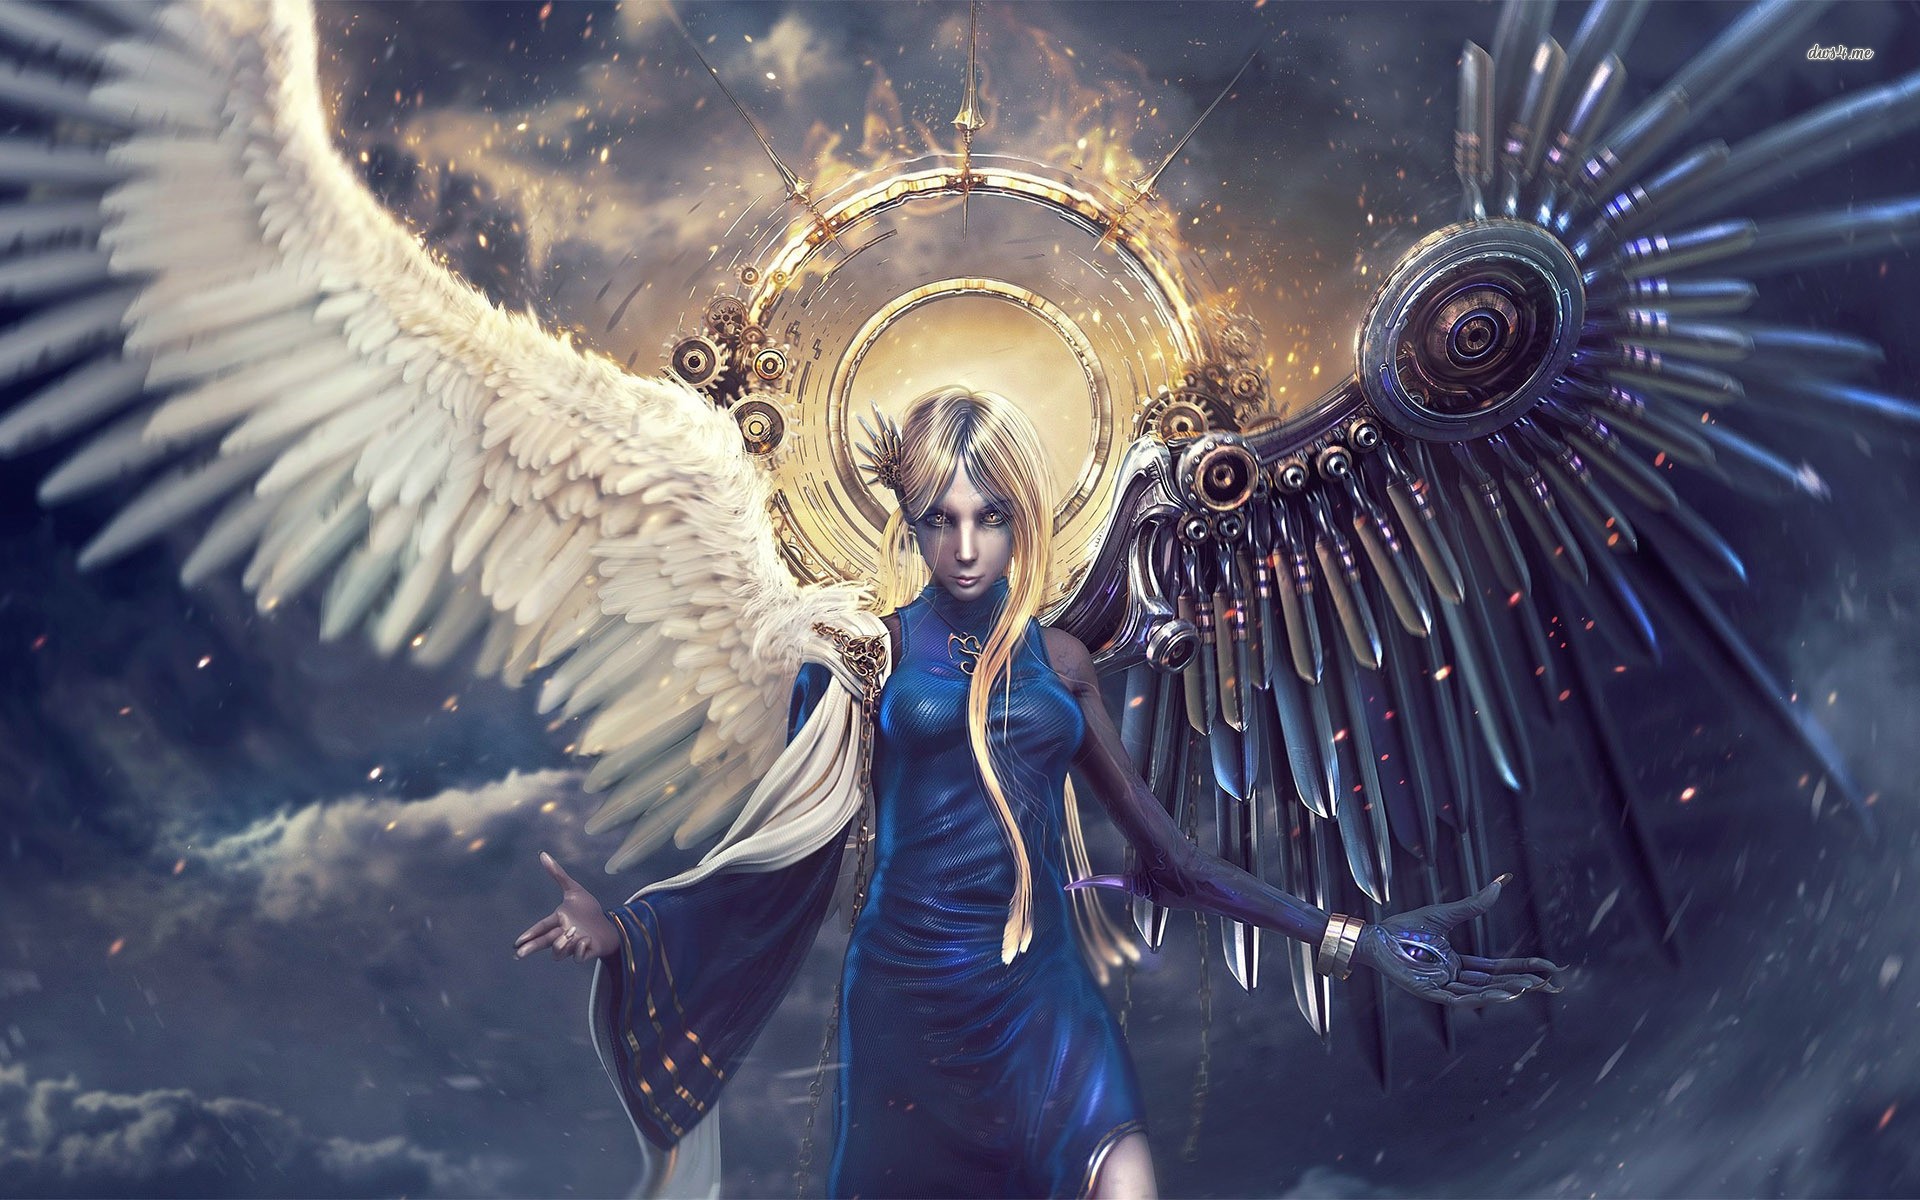 General 1920x1200 angel wings digital art long hair fantasy art fantasy girl women blonde blue dress dress blue clothing looking at viewer artwork